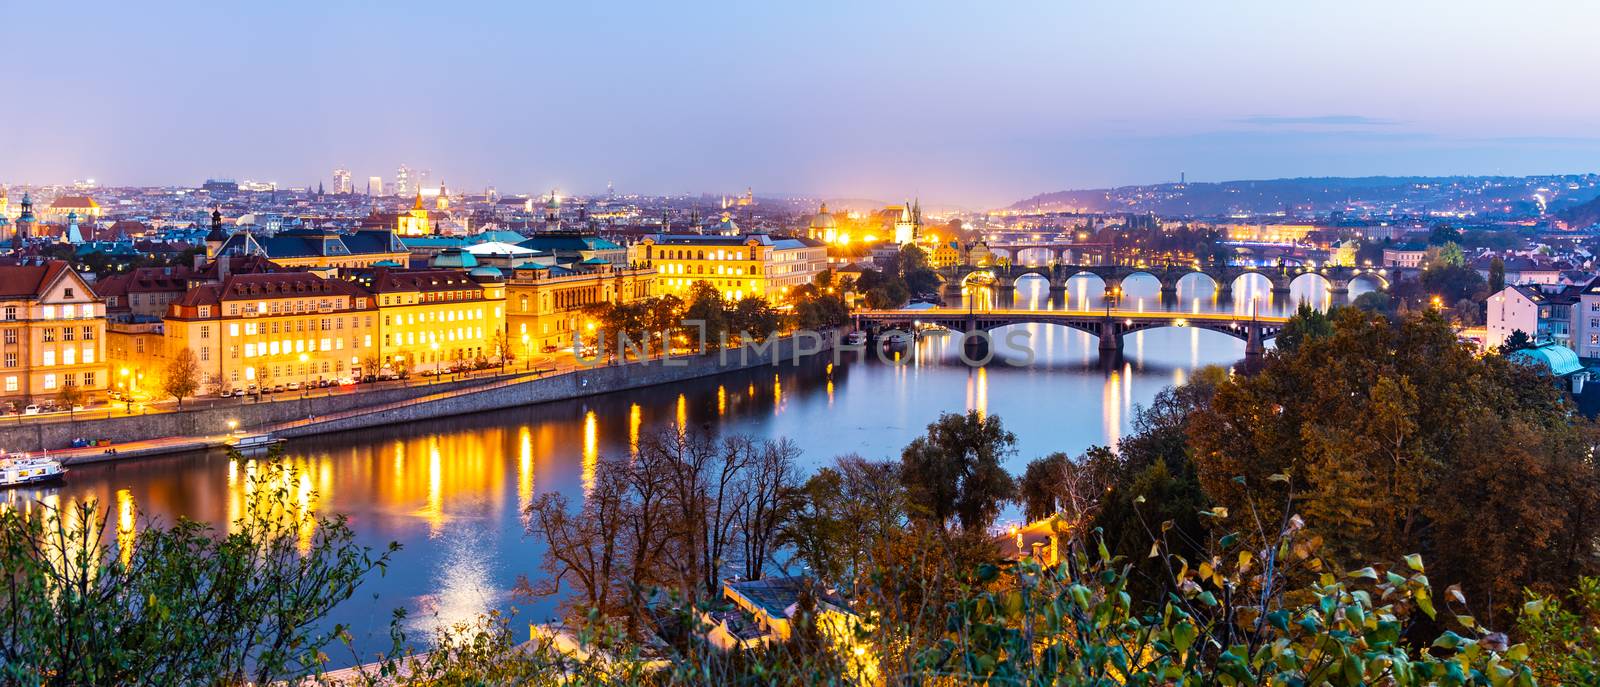 Prague bridges over Vltava River in the evening, Praha, Czech Republic by pyty